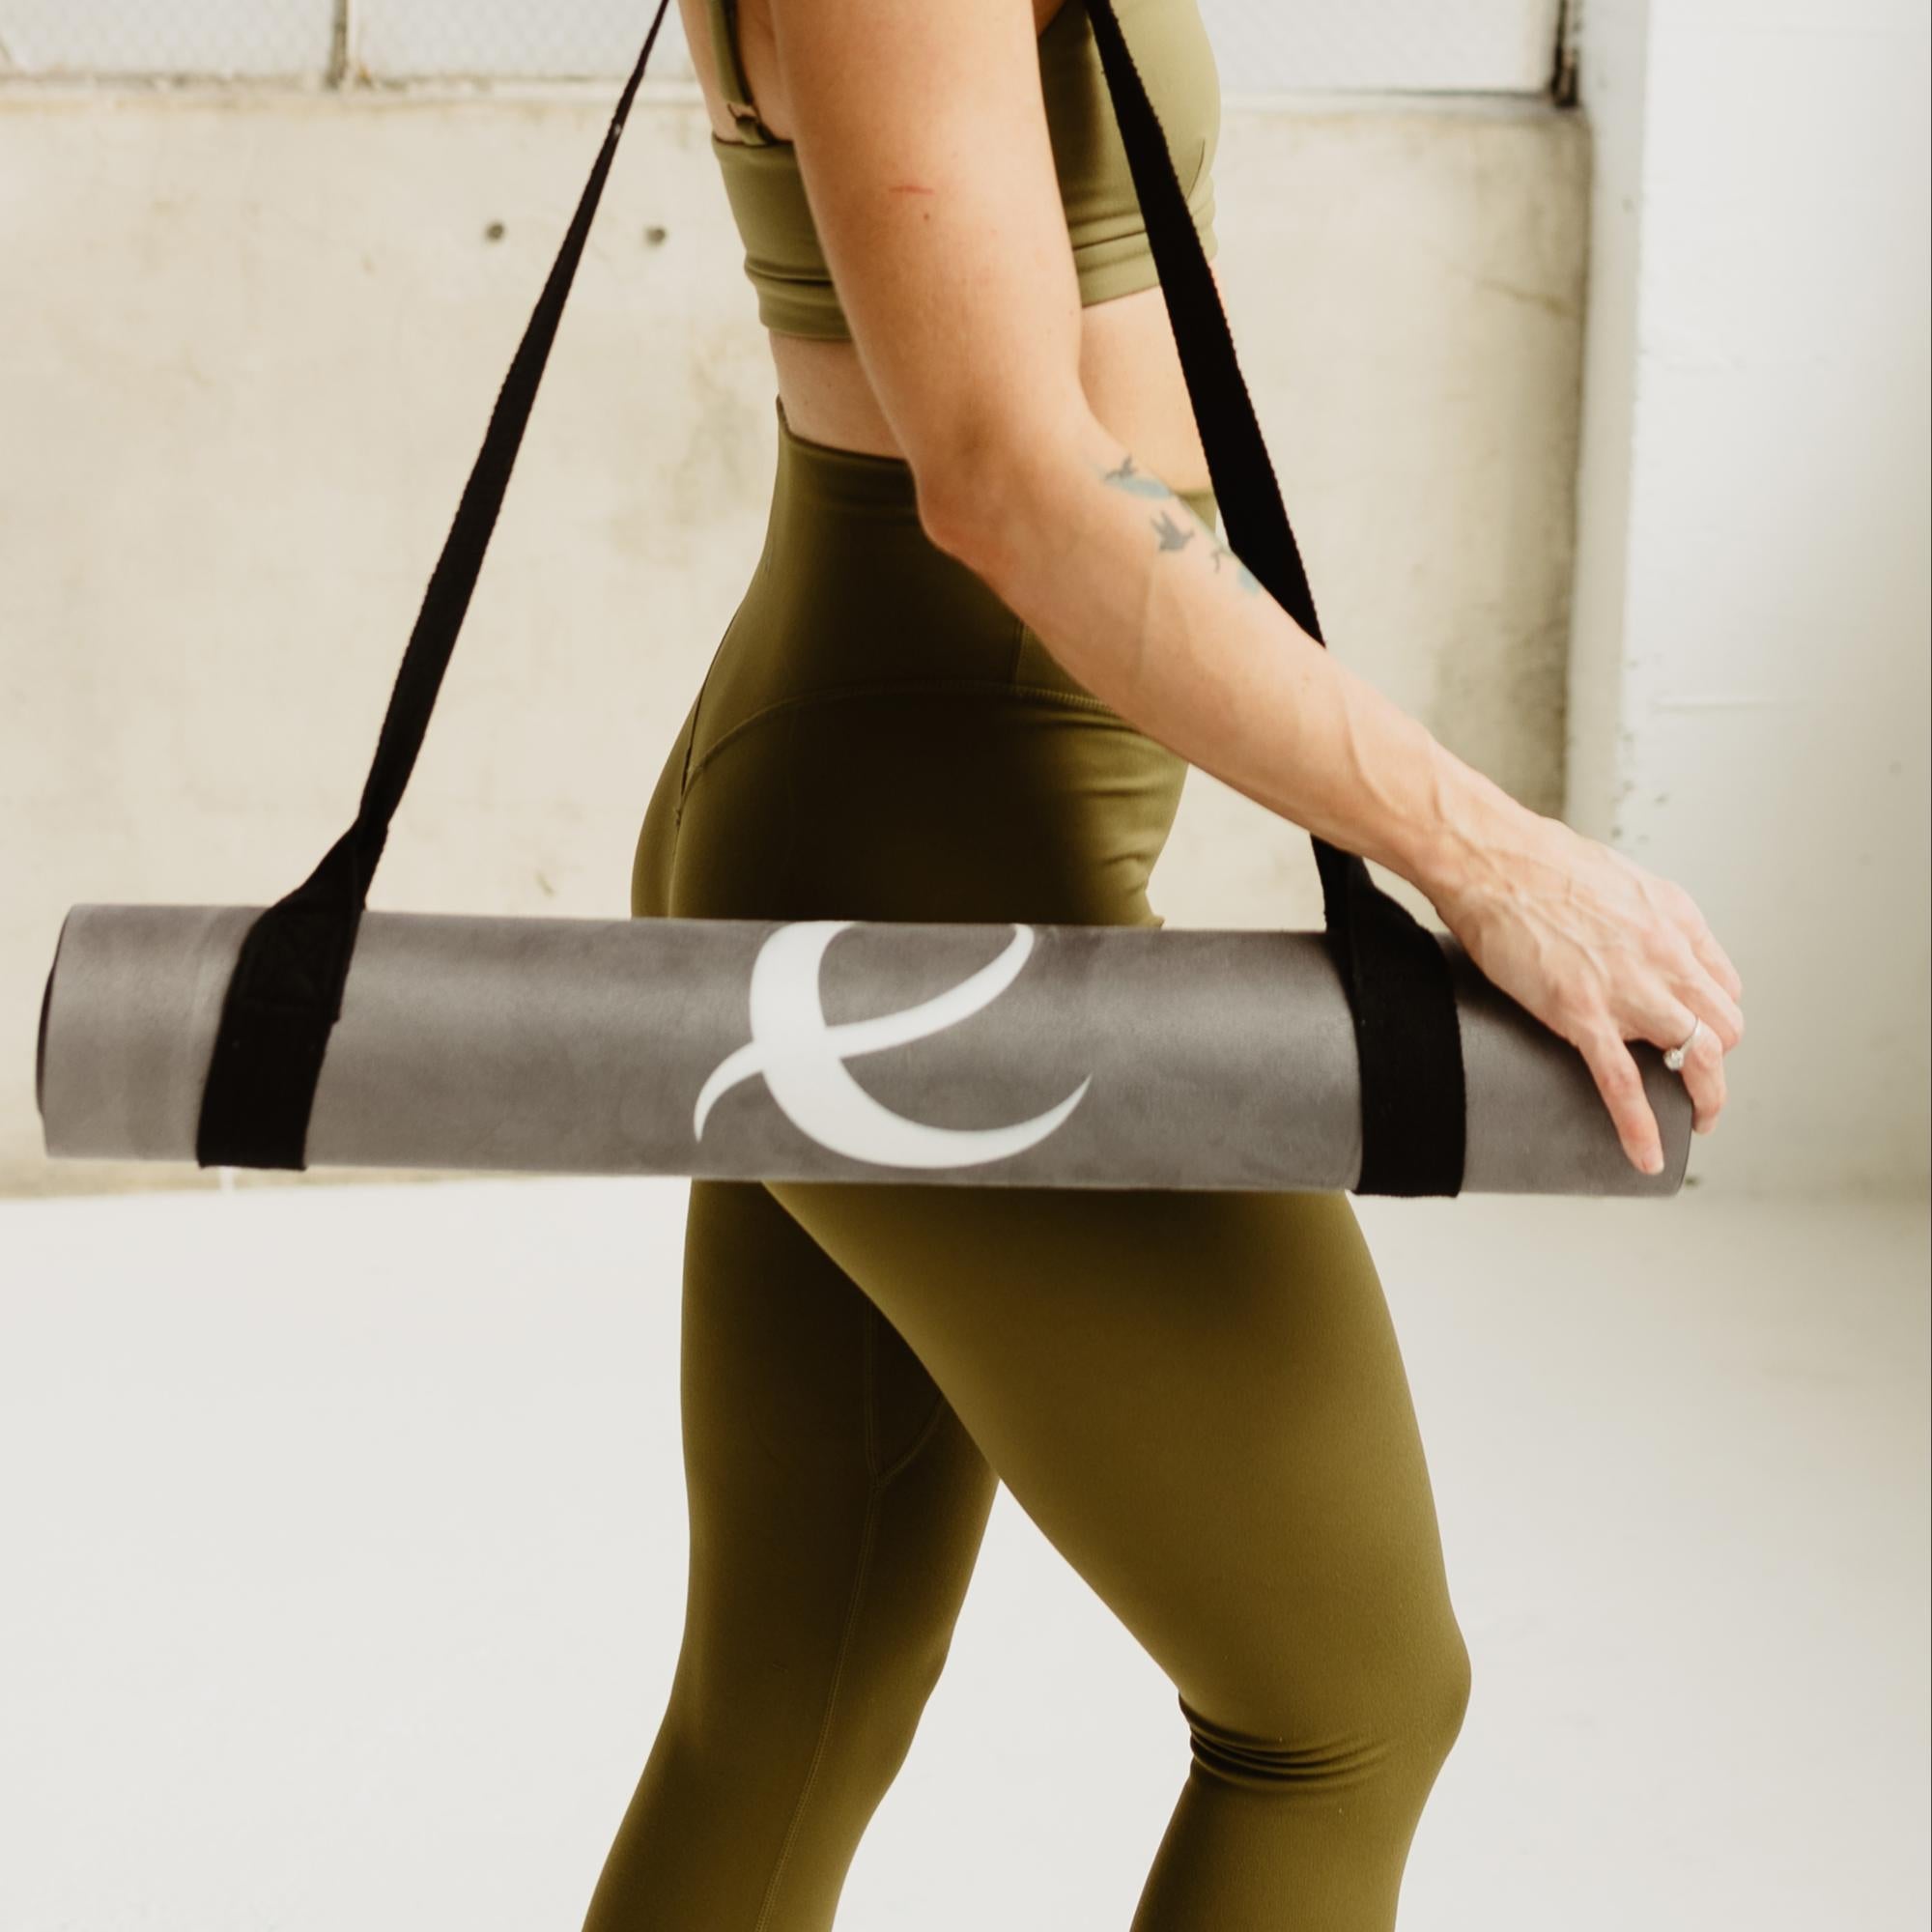 Travel Yoga Mat - Lightweight, Portable